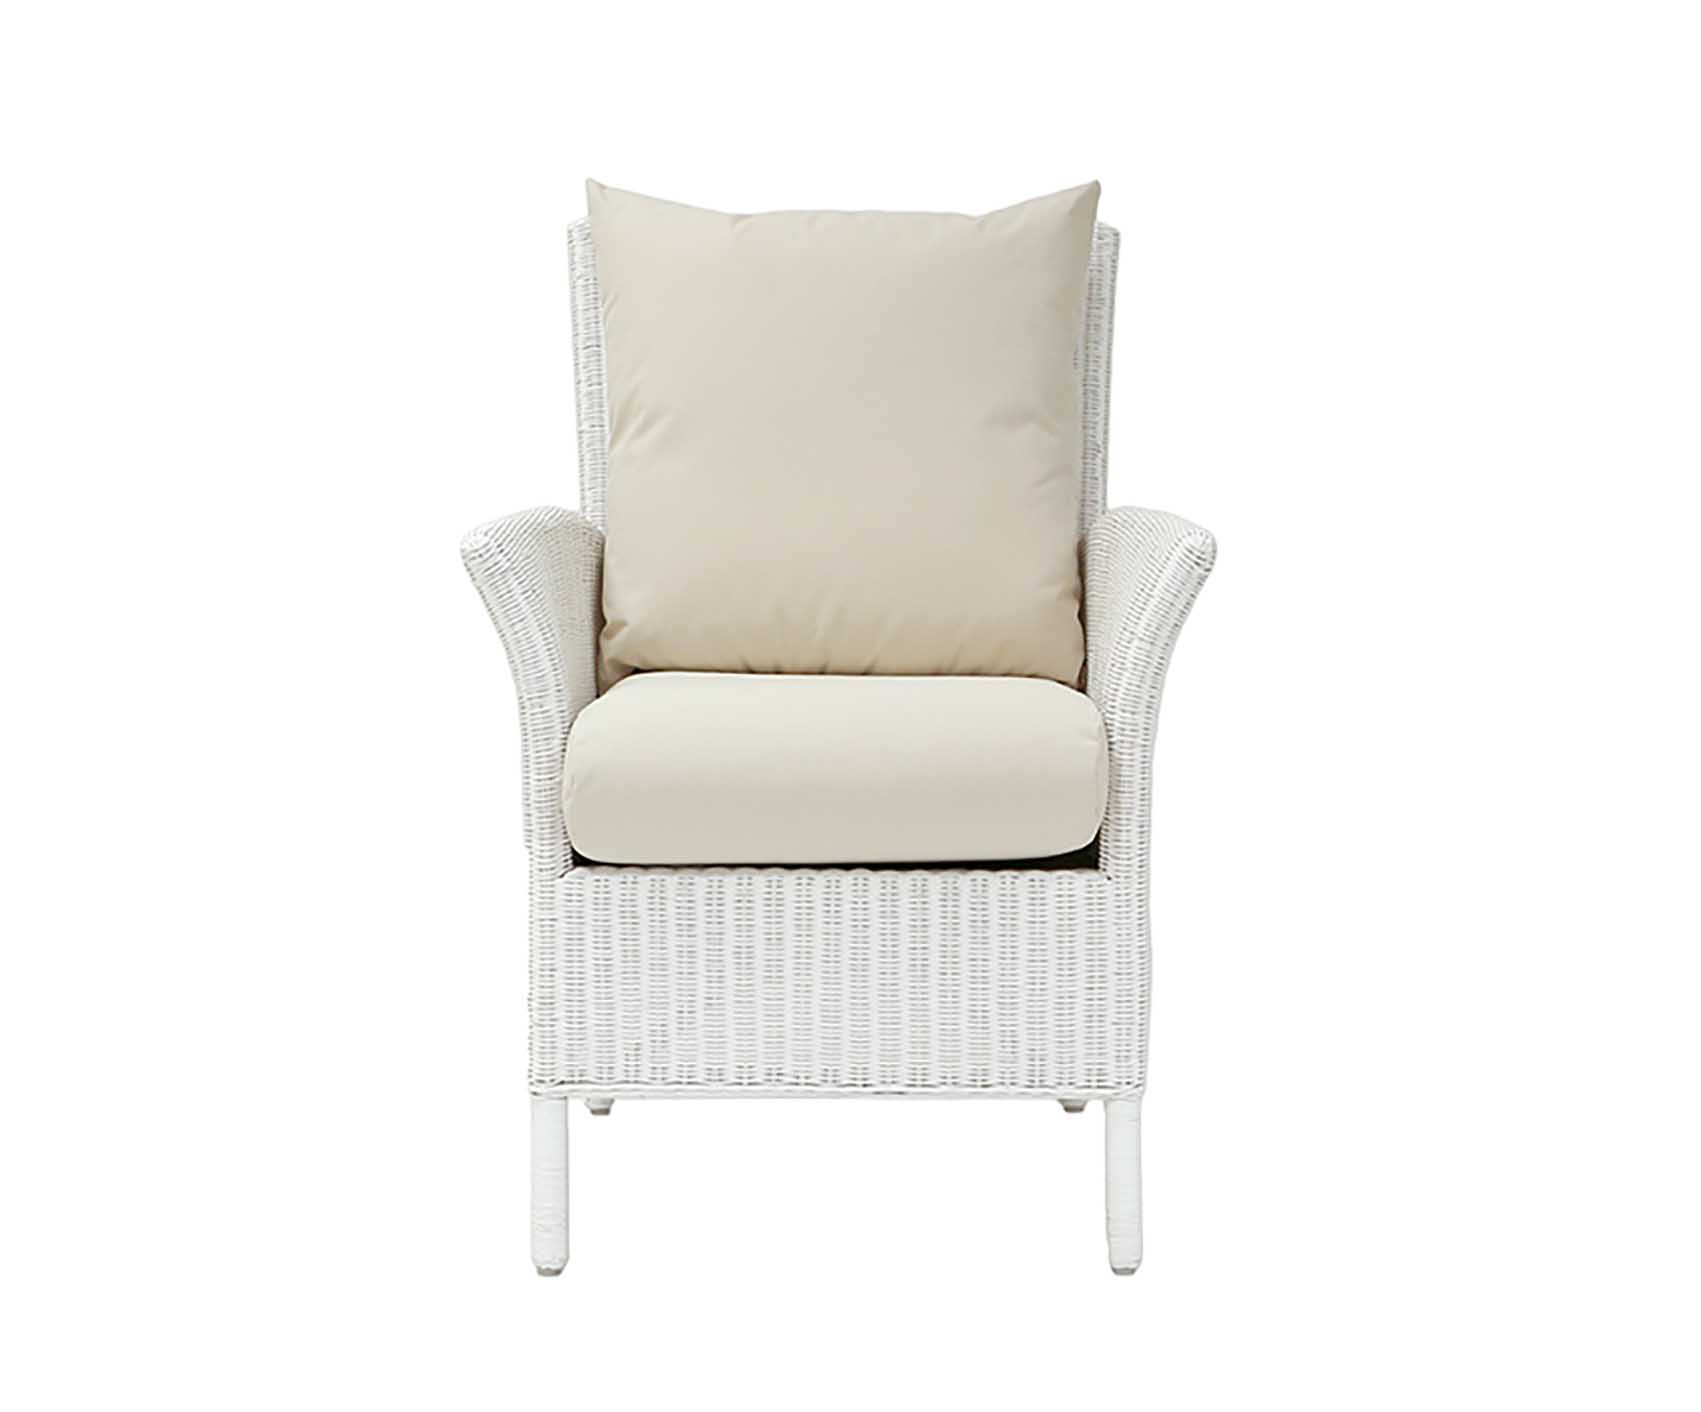 Wilton Chair by Laura Ashley